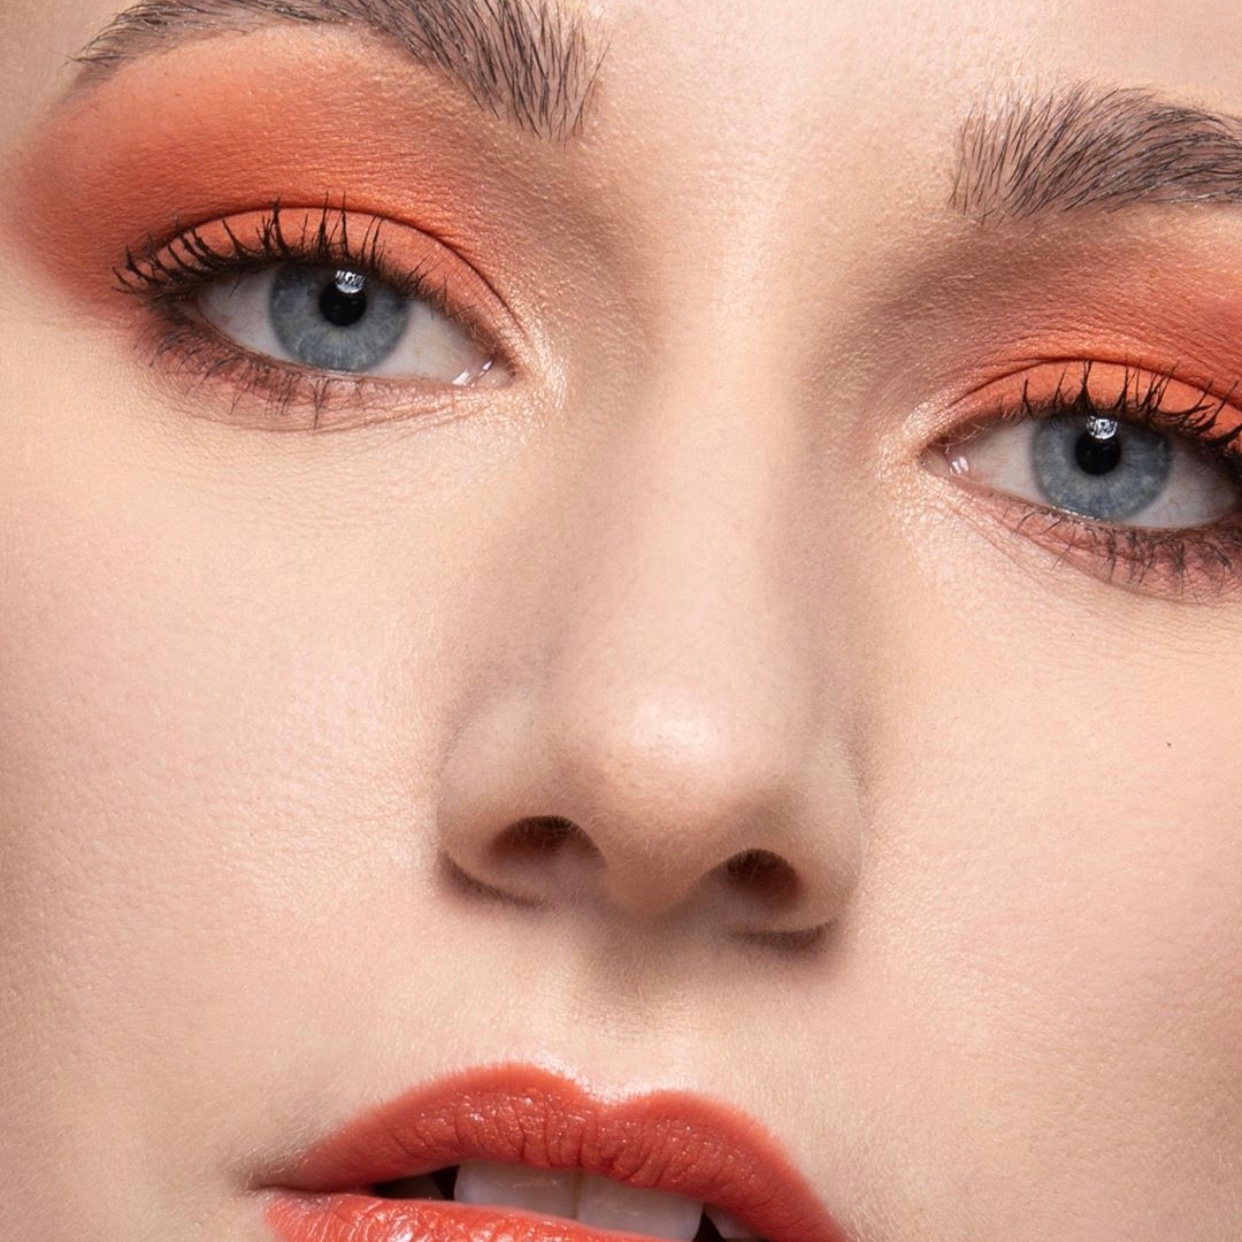 A makeup artist applying monochromatic makeup to create a winter makeup look